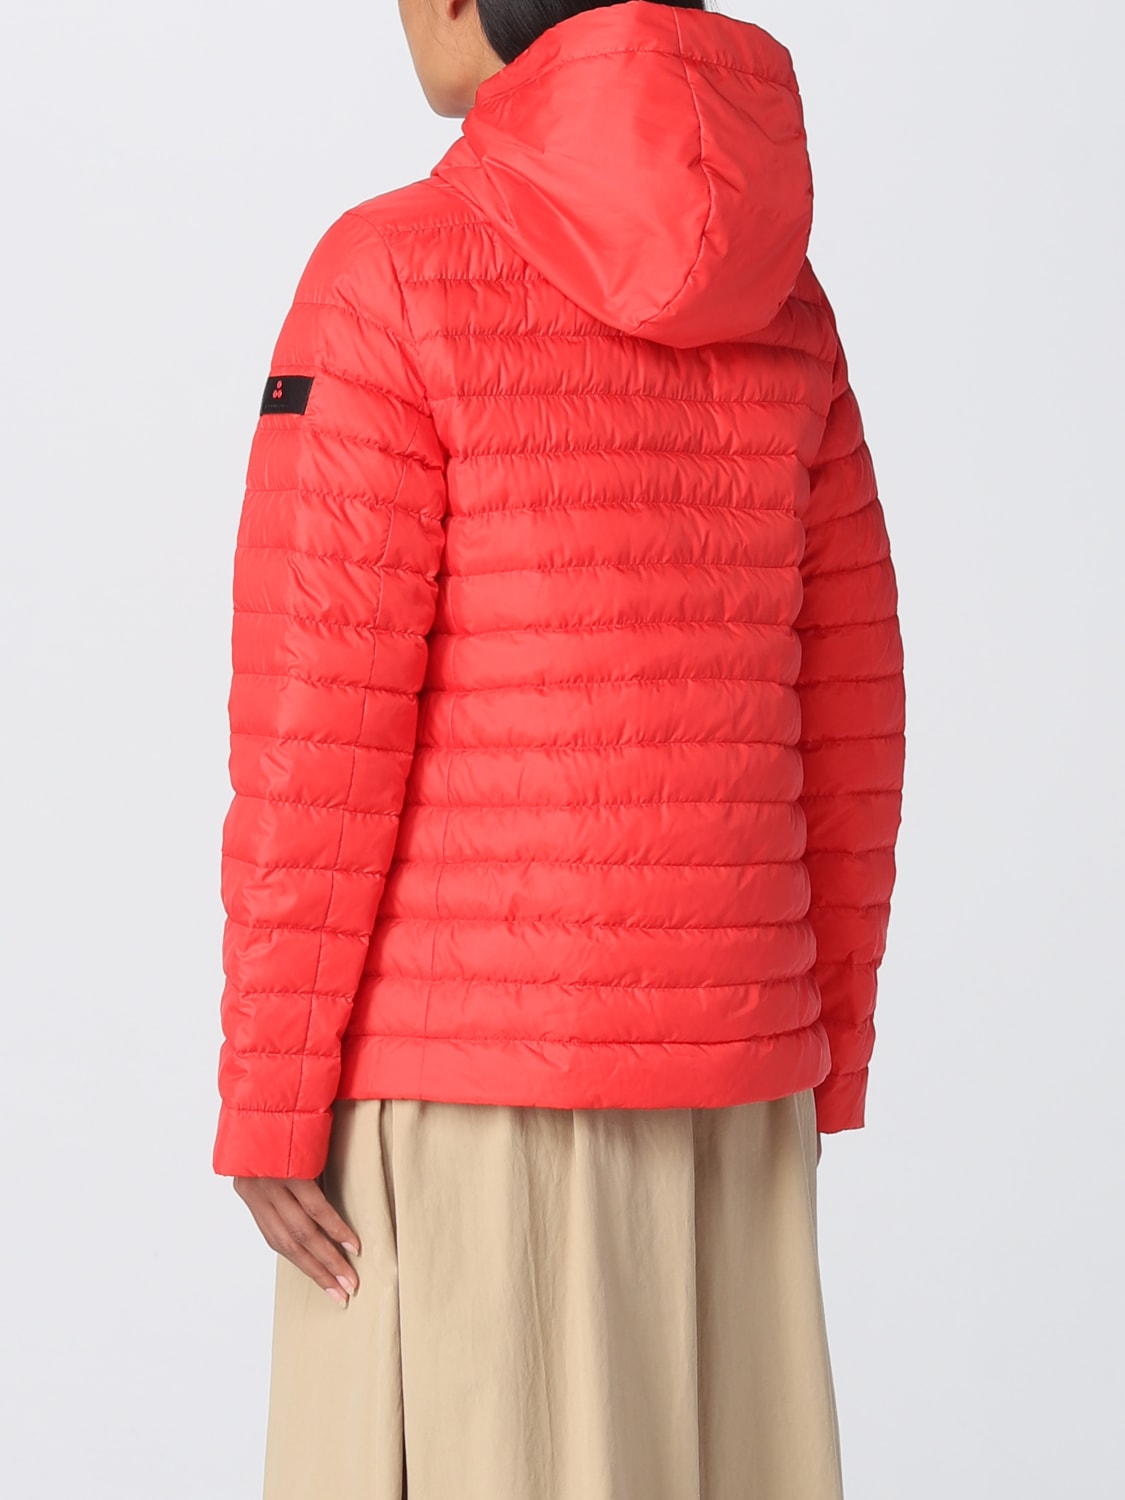 Jacket Peuterey: Peuterey jacket for women red 2